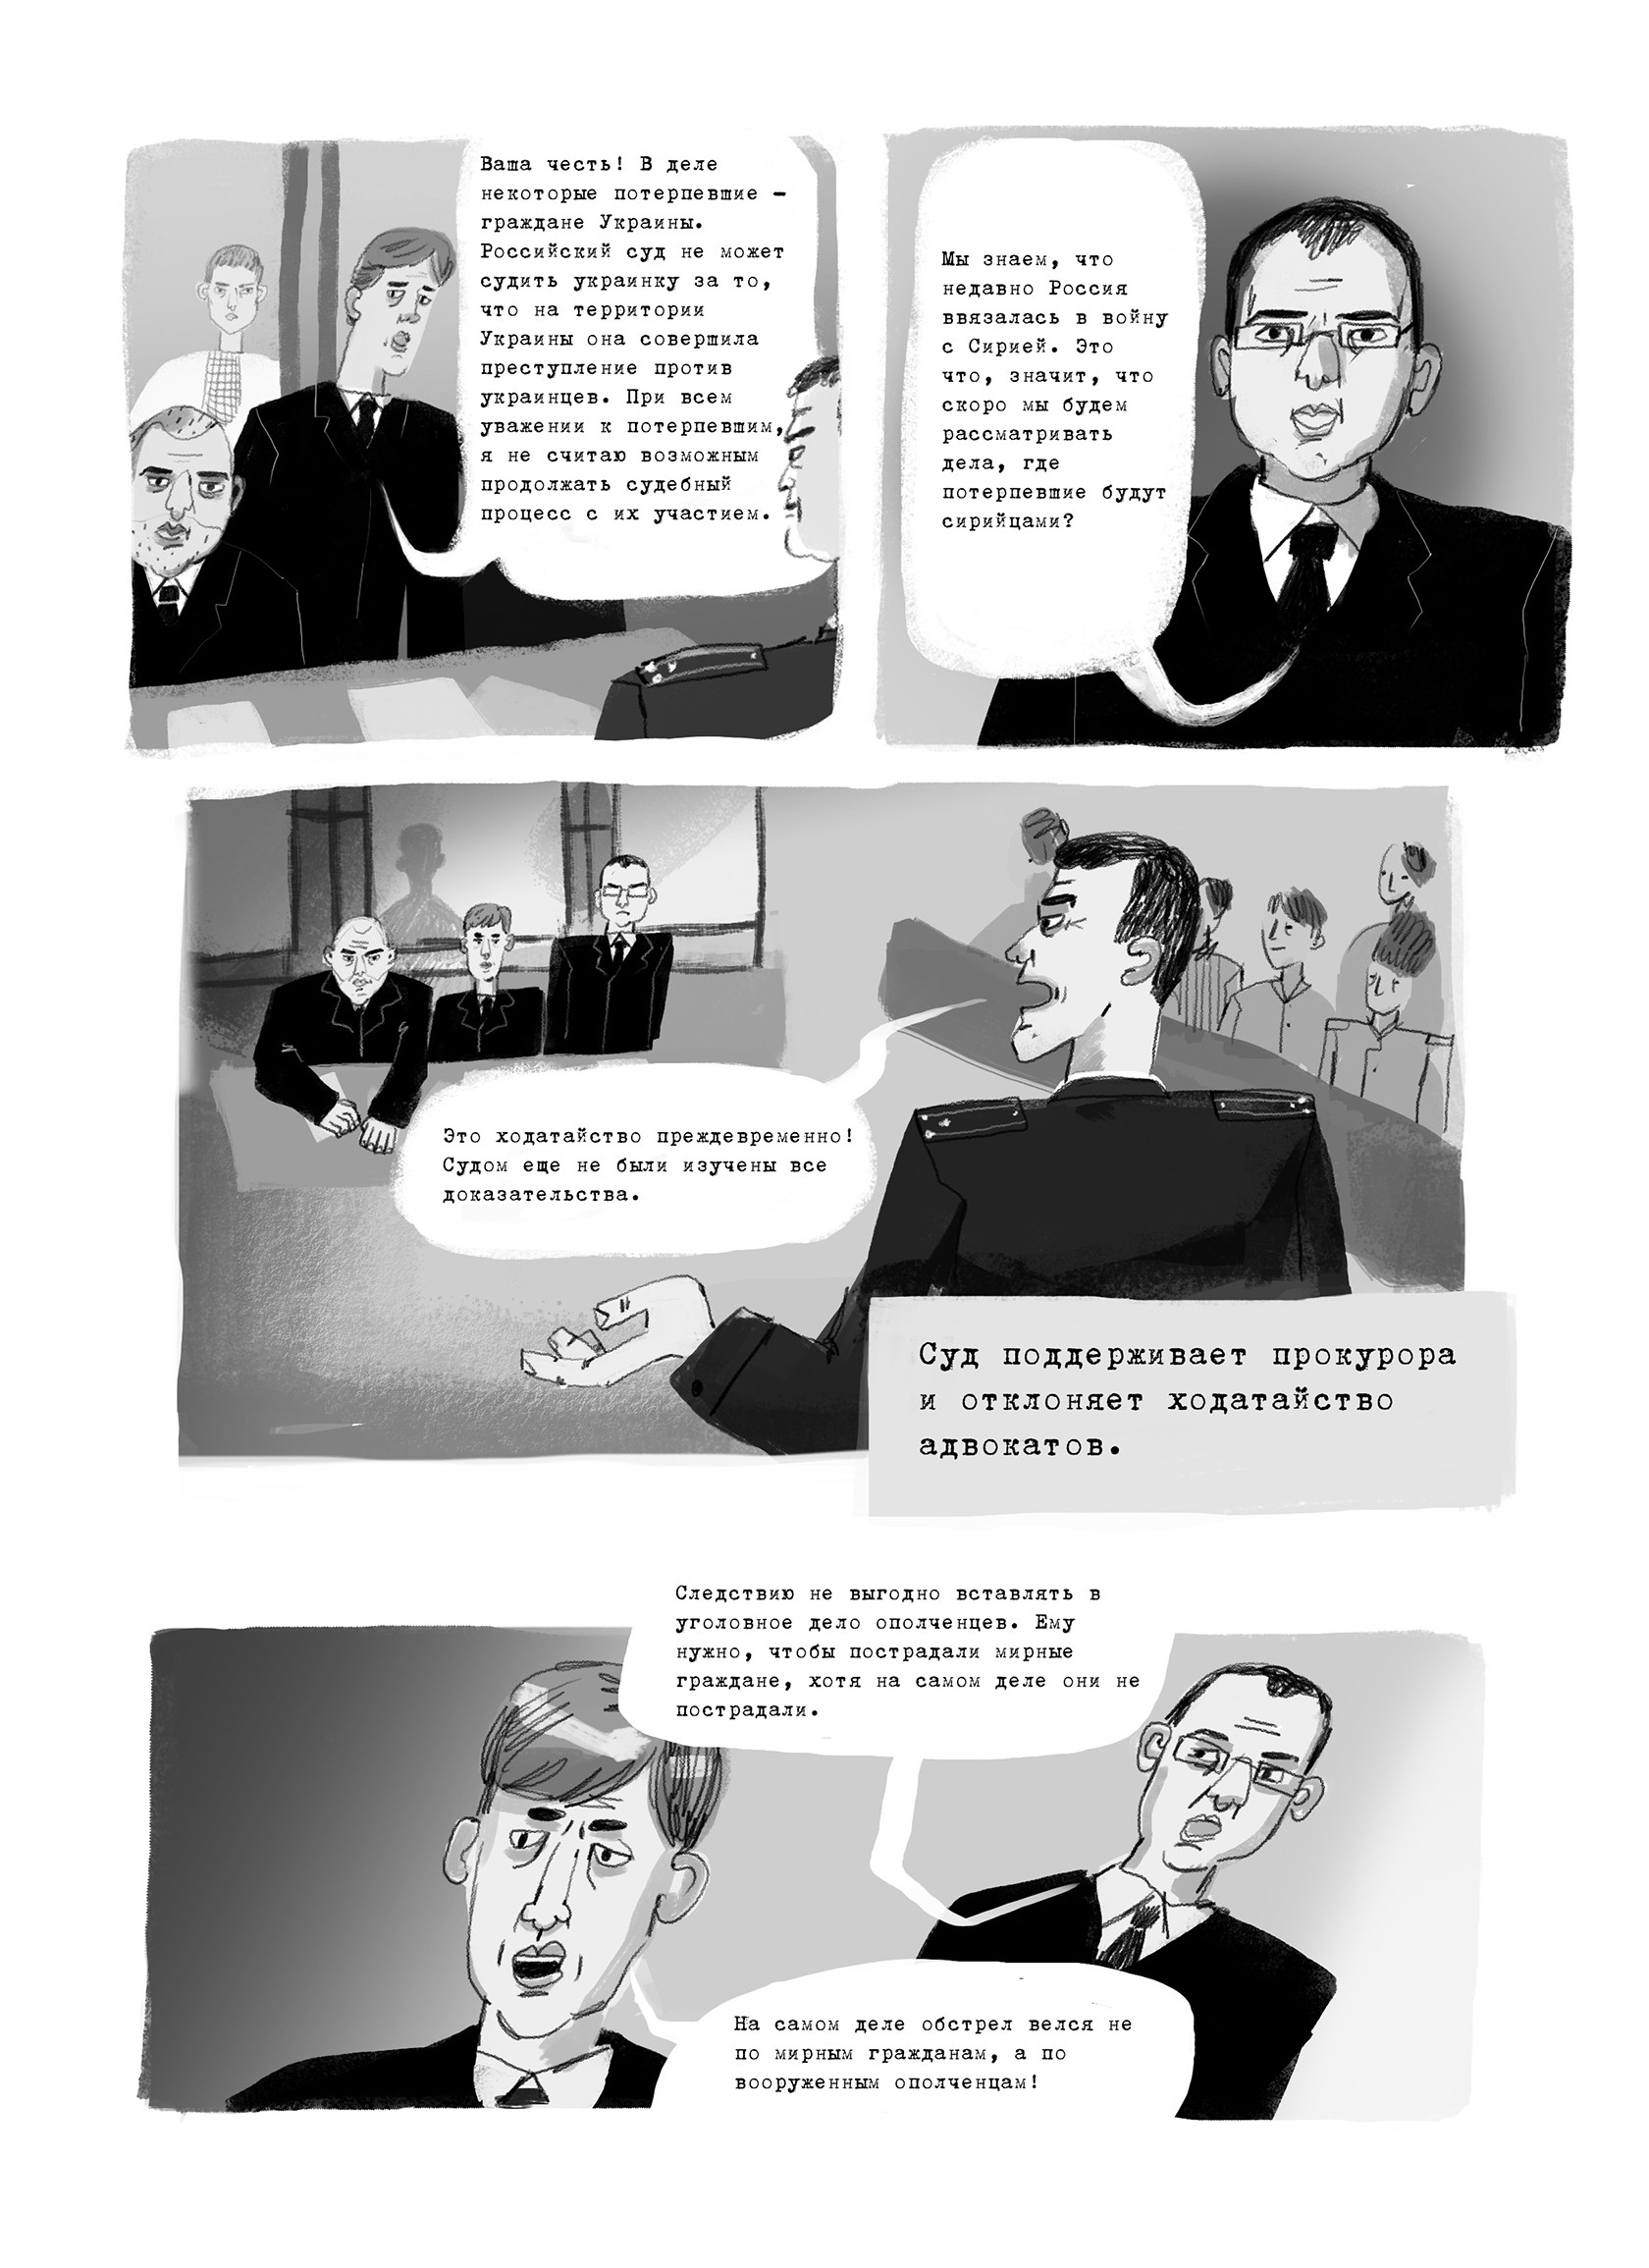 В Росії Савченко стала героїнею коміксу - фото 2